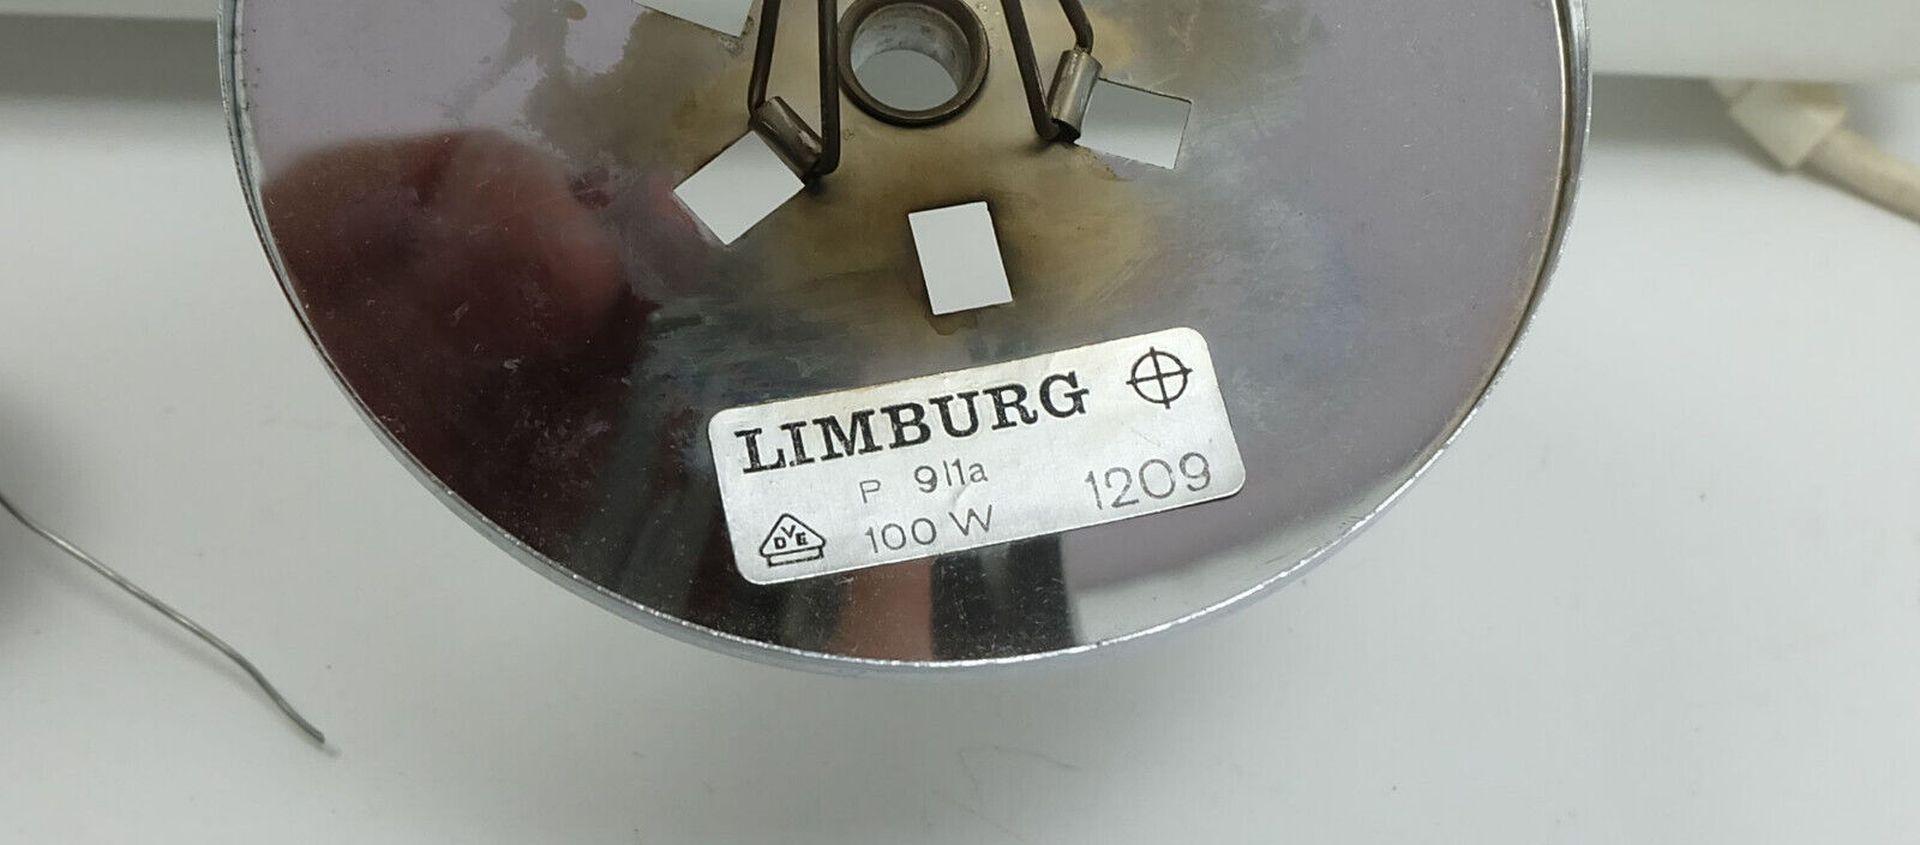 large limburg mid century bubble glass PENDANT LIGHT model P 911 a 1209 clear gl For Sale 4